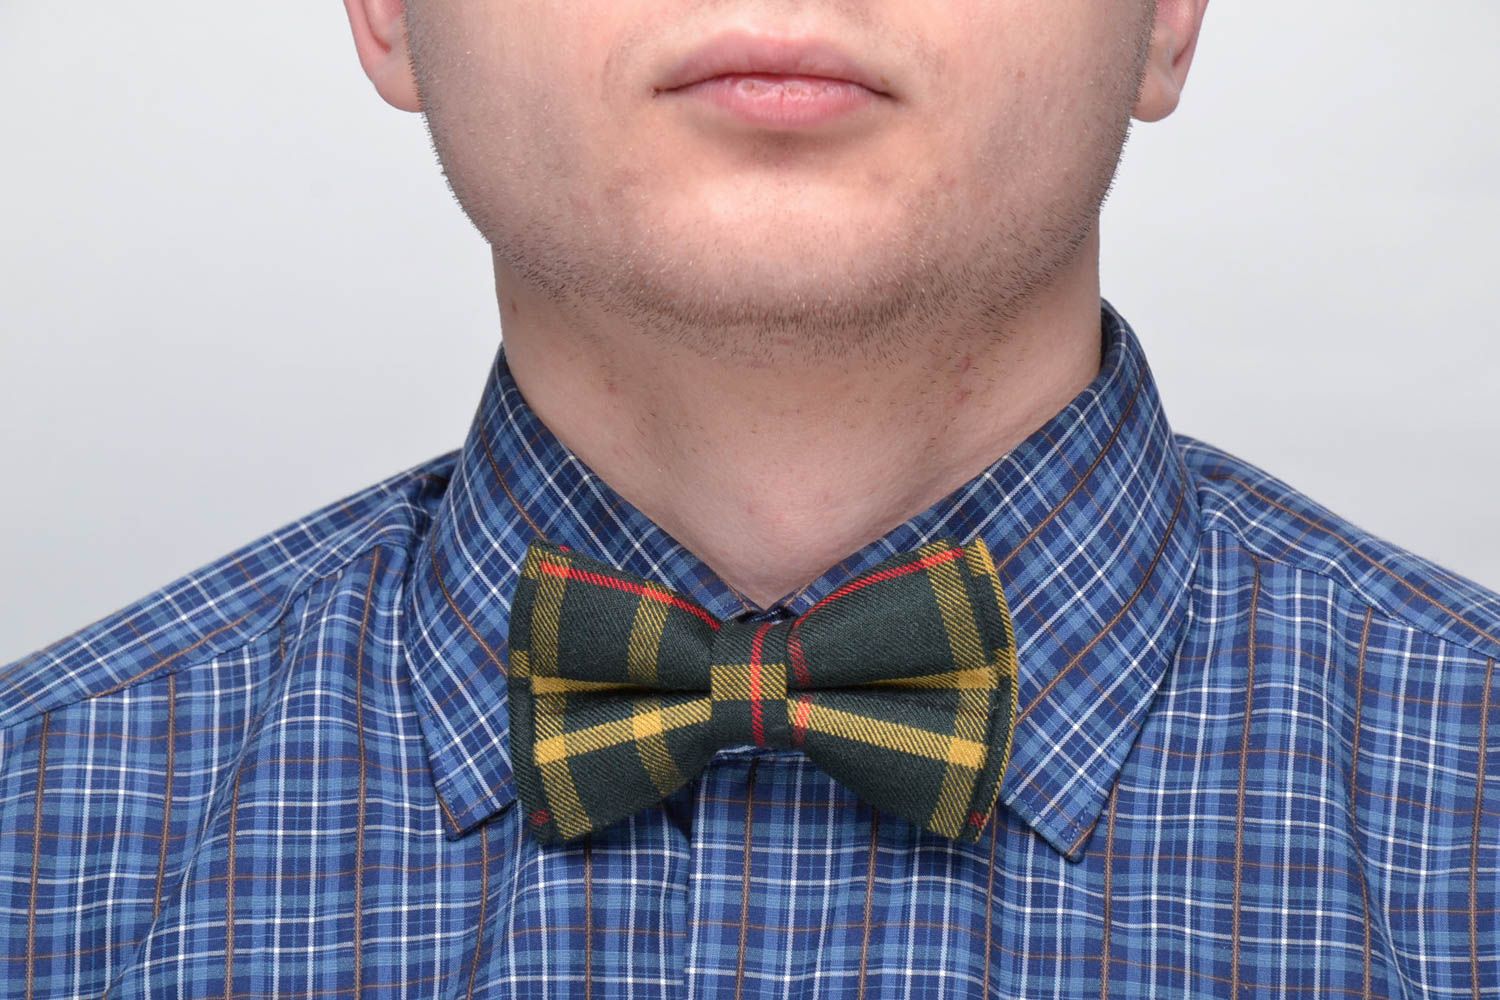 Stylish bow tie photo 2